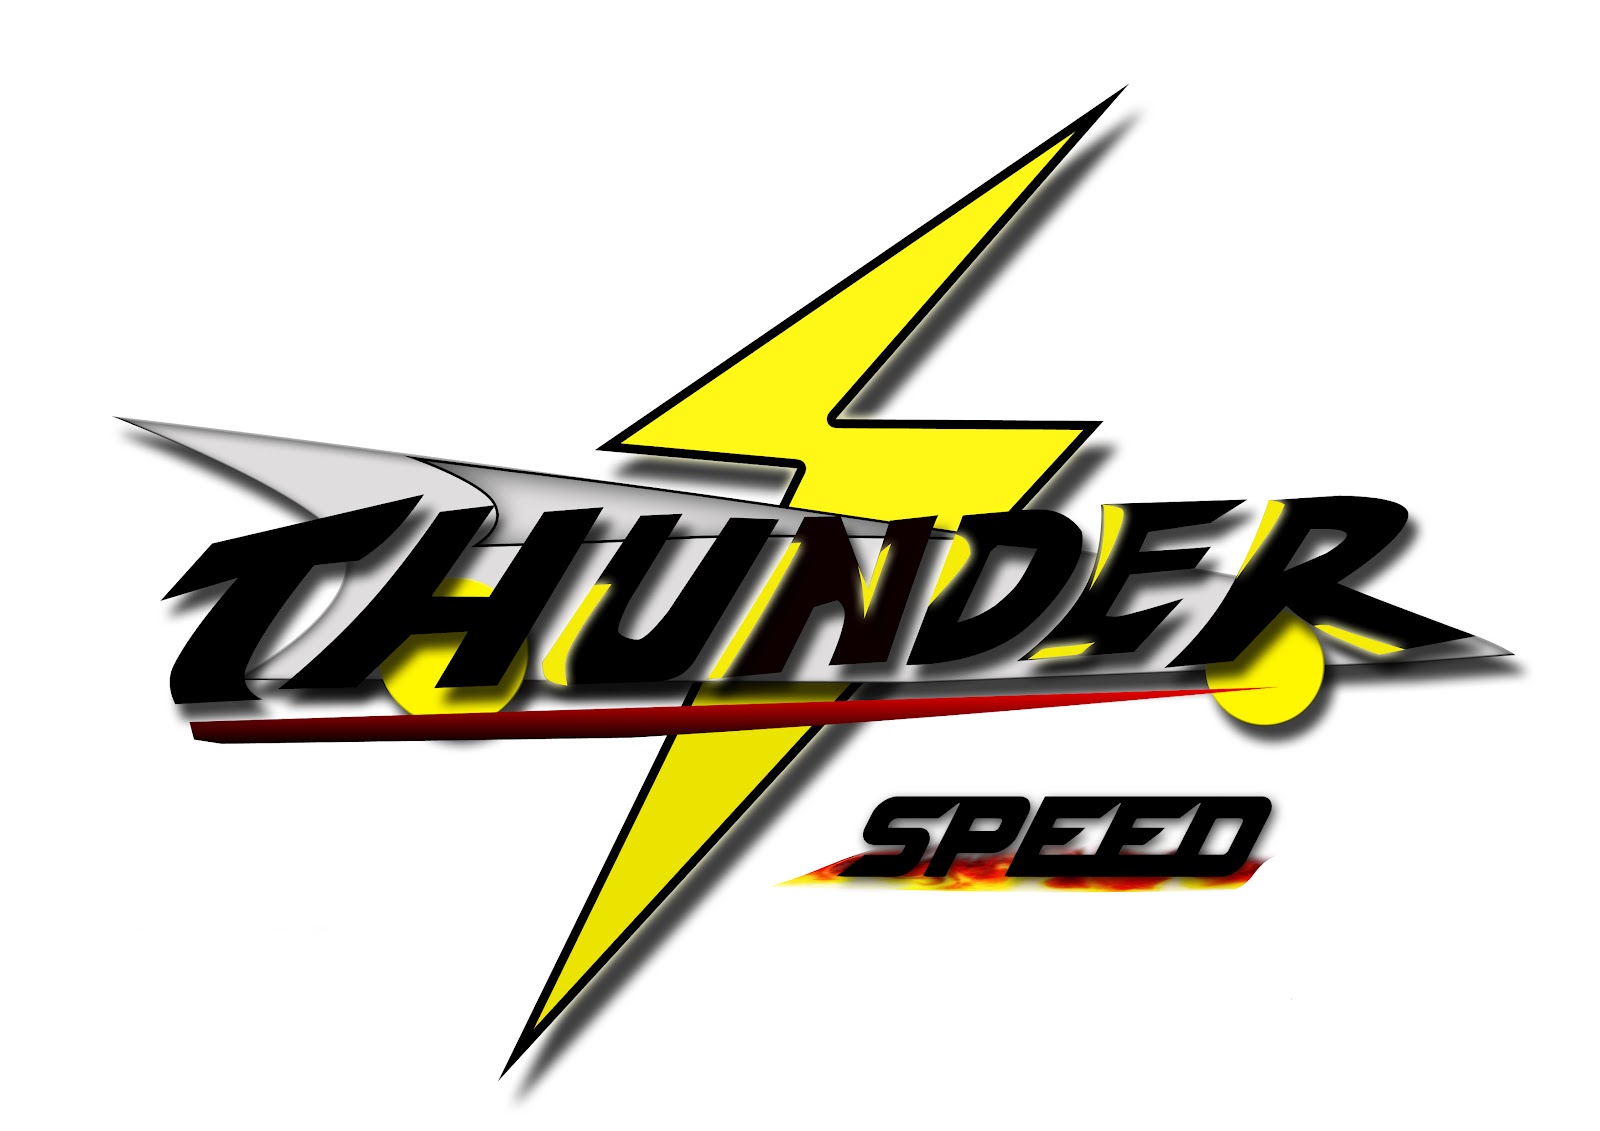 THUNDER SPEED TEAM F1: our logo